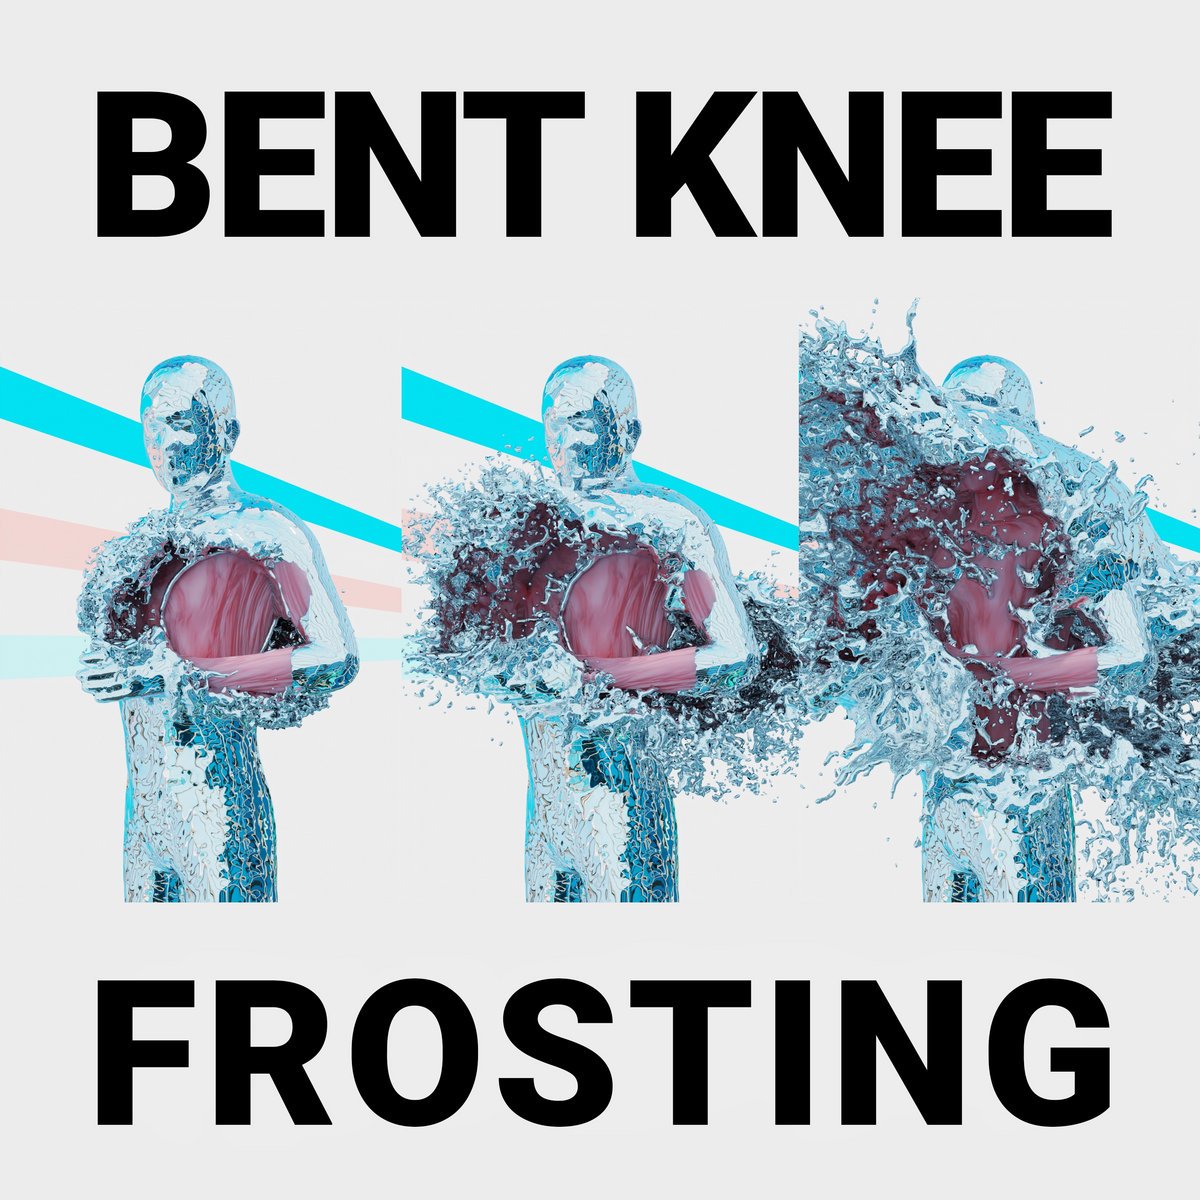 bent knee frosting.jpeg